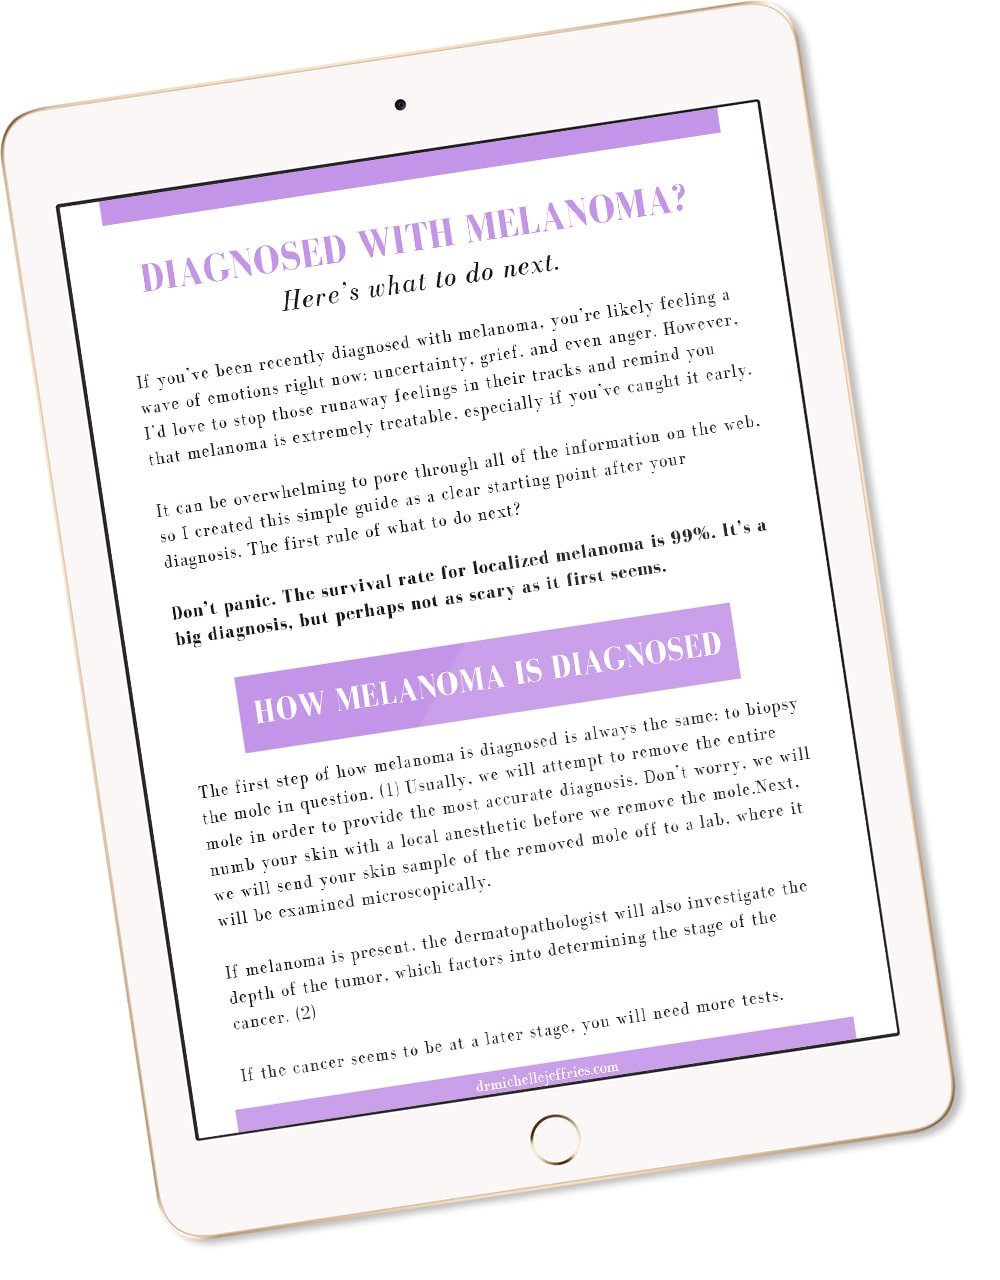 Melanoma Guide on iPad